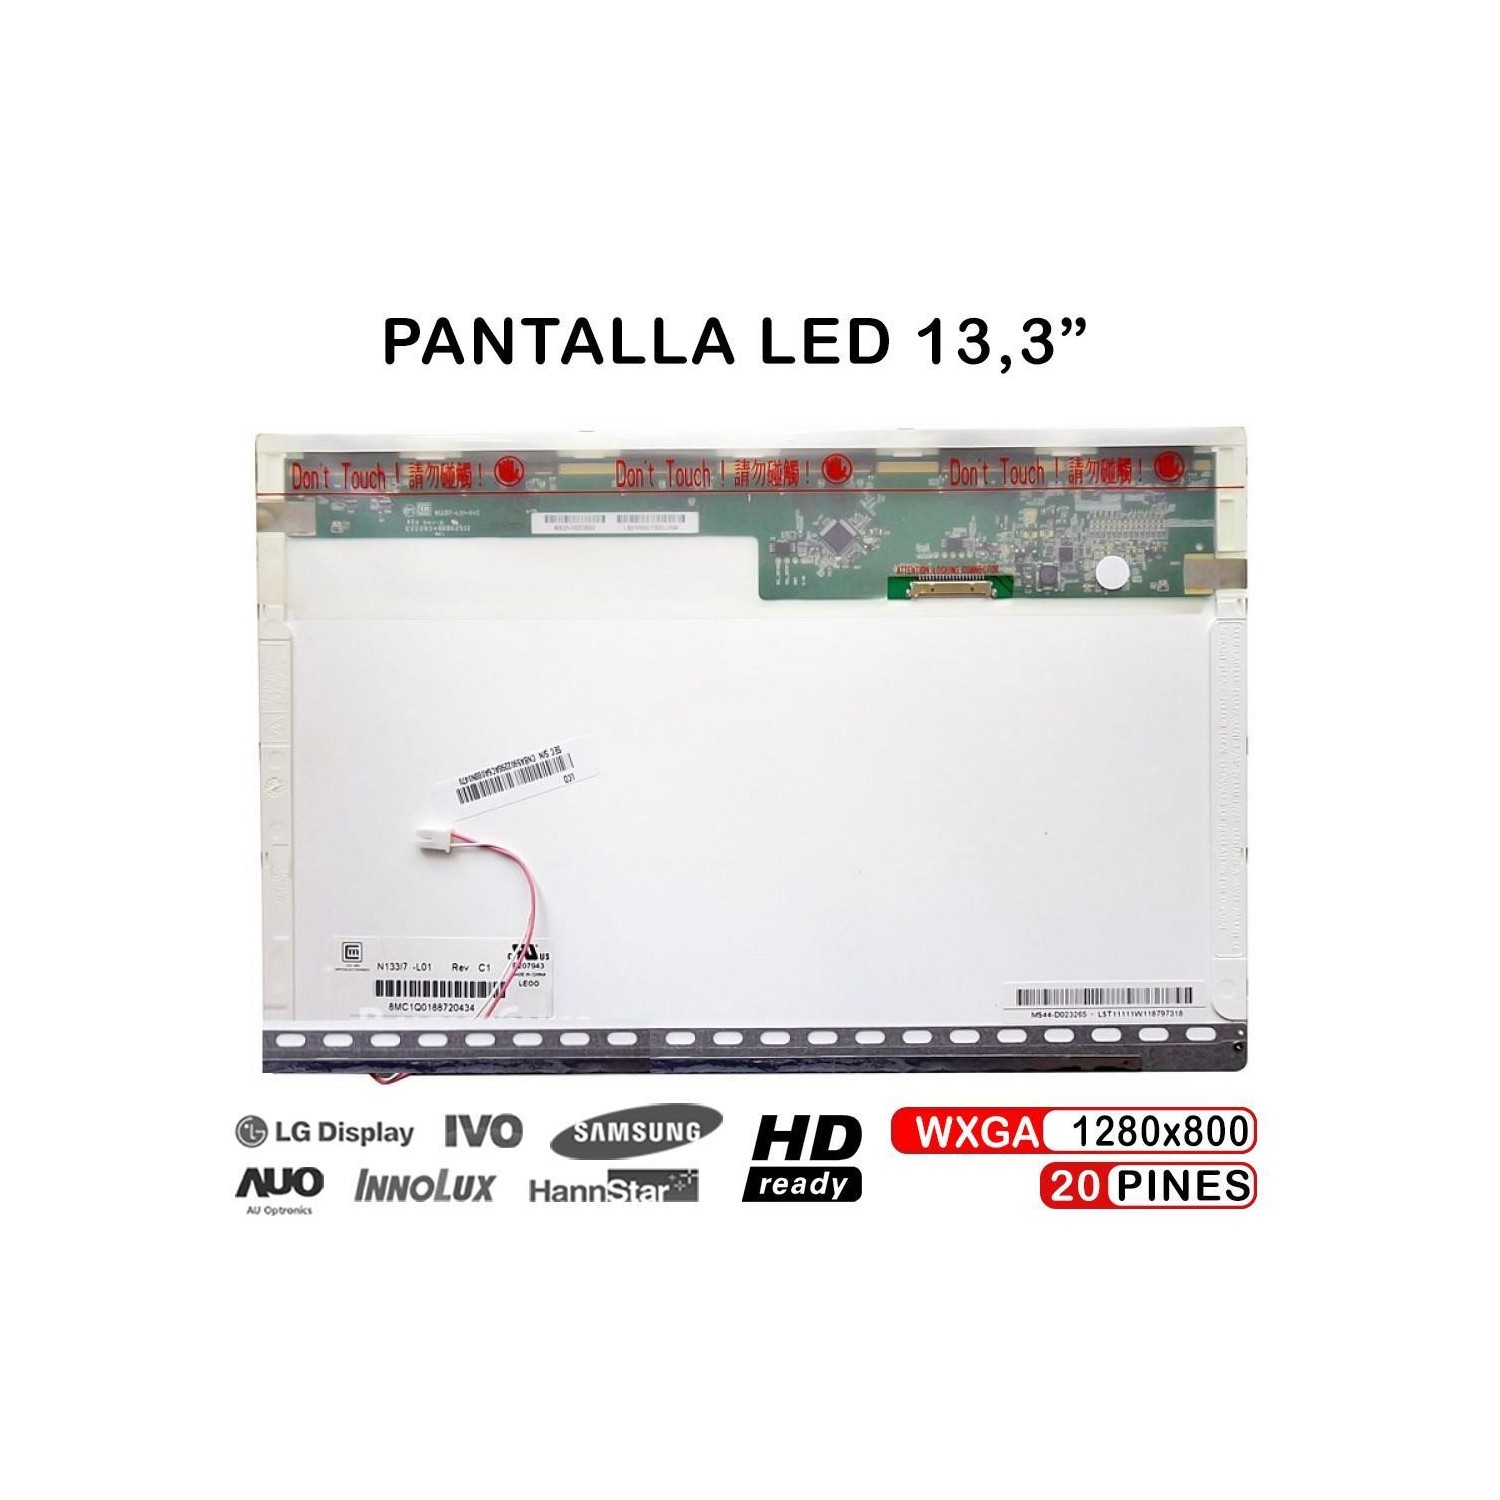 PANTALLA LCD PARA APPLE MACBOOK 661-3959 13.3" LP133WX1(TL)(A1)